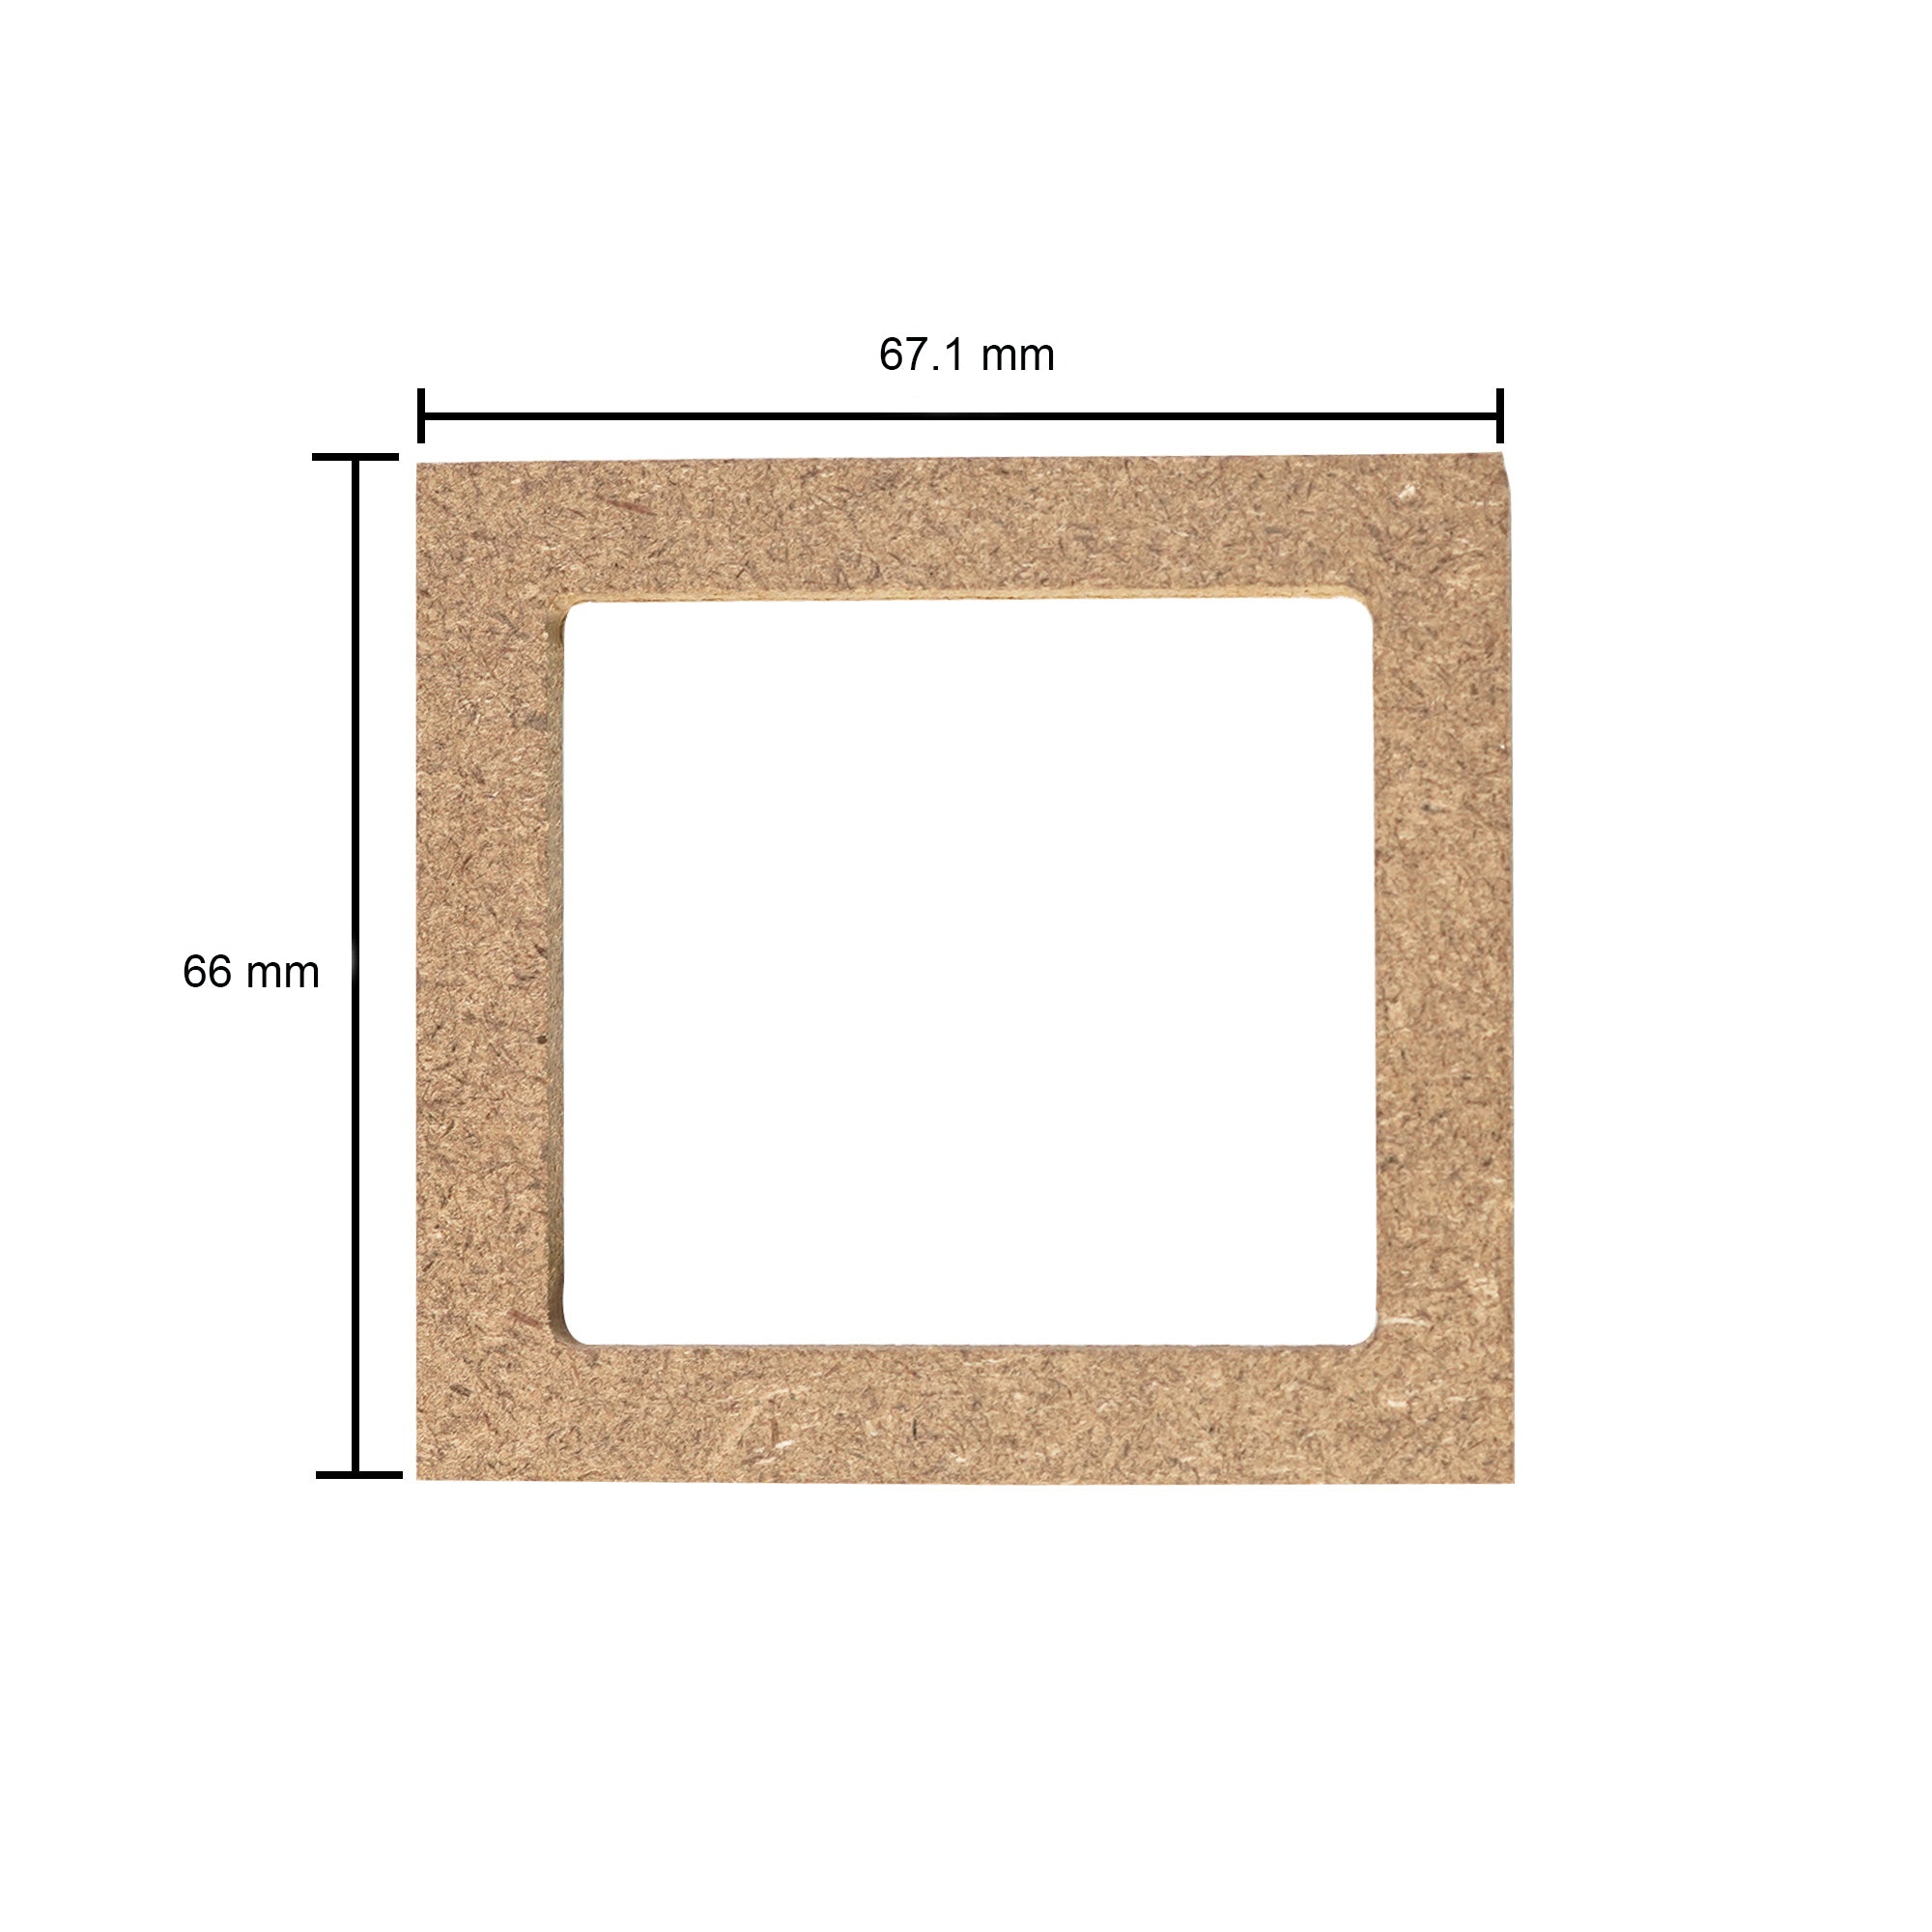 Build A Home Box Chajja For 2 Door Window W61.7 X H66 mm 1pc